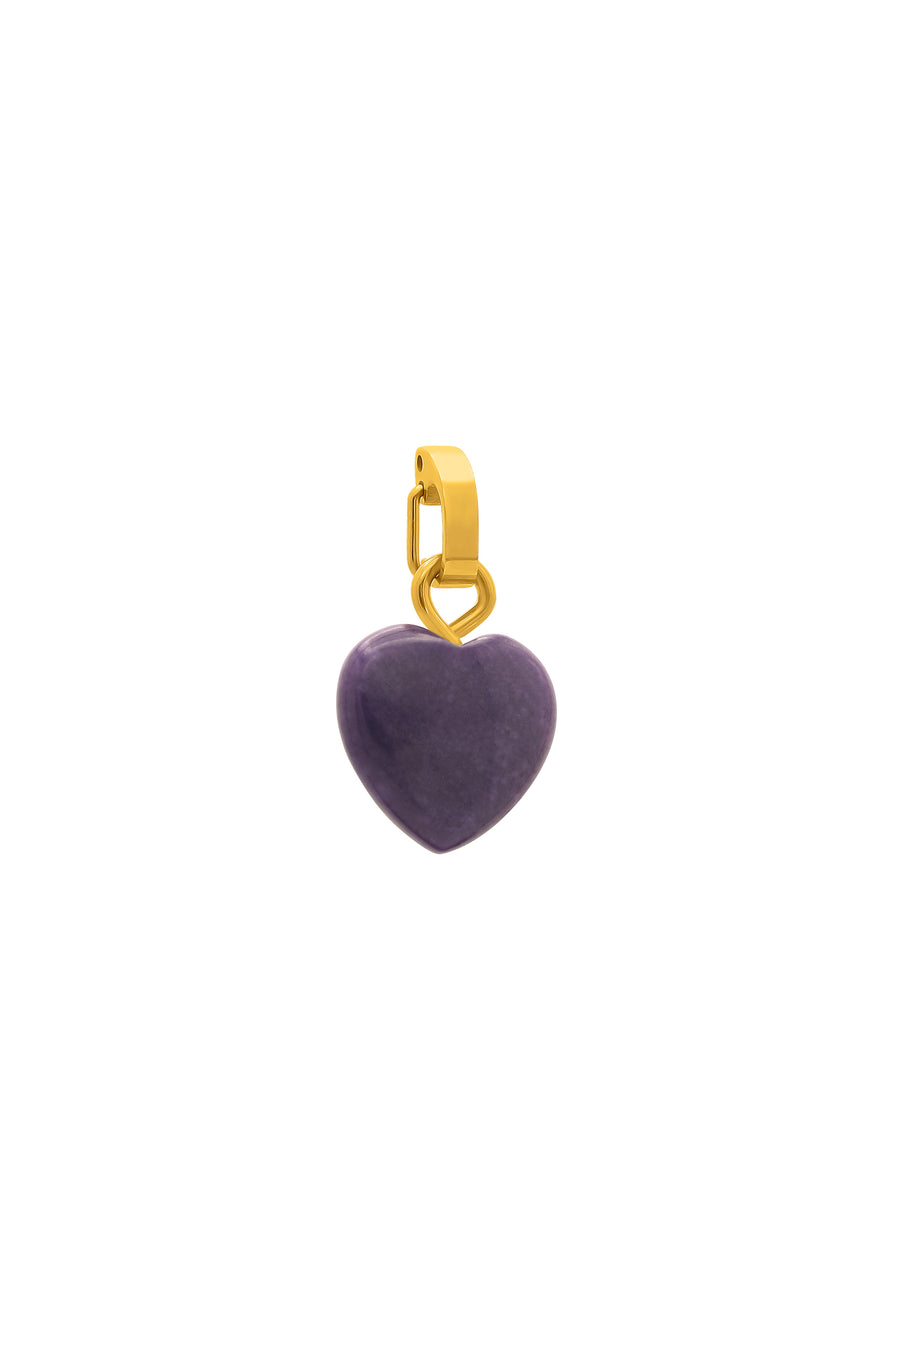 February Heart Birthstone Pendant